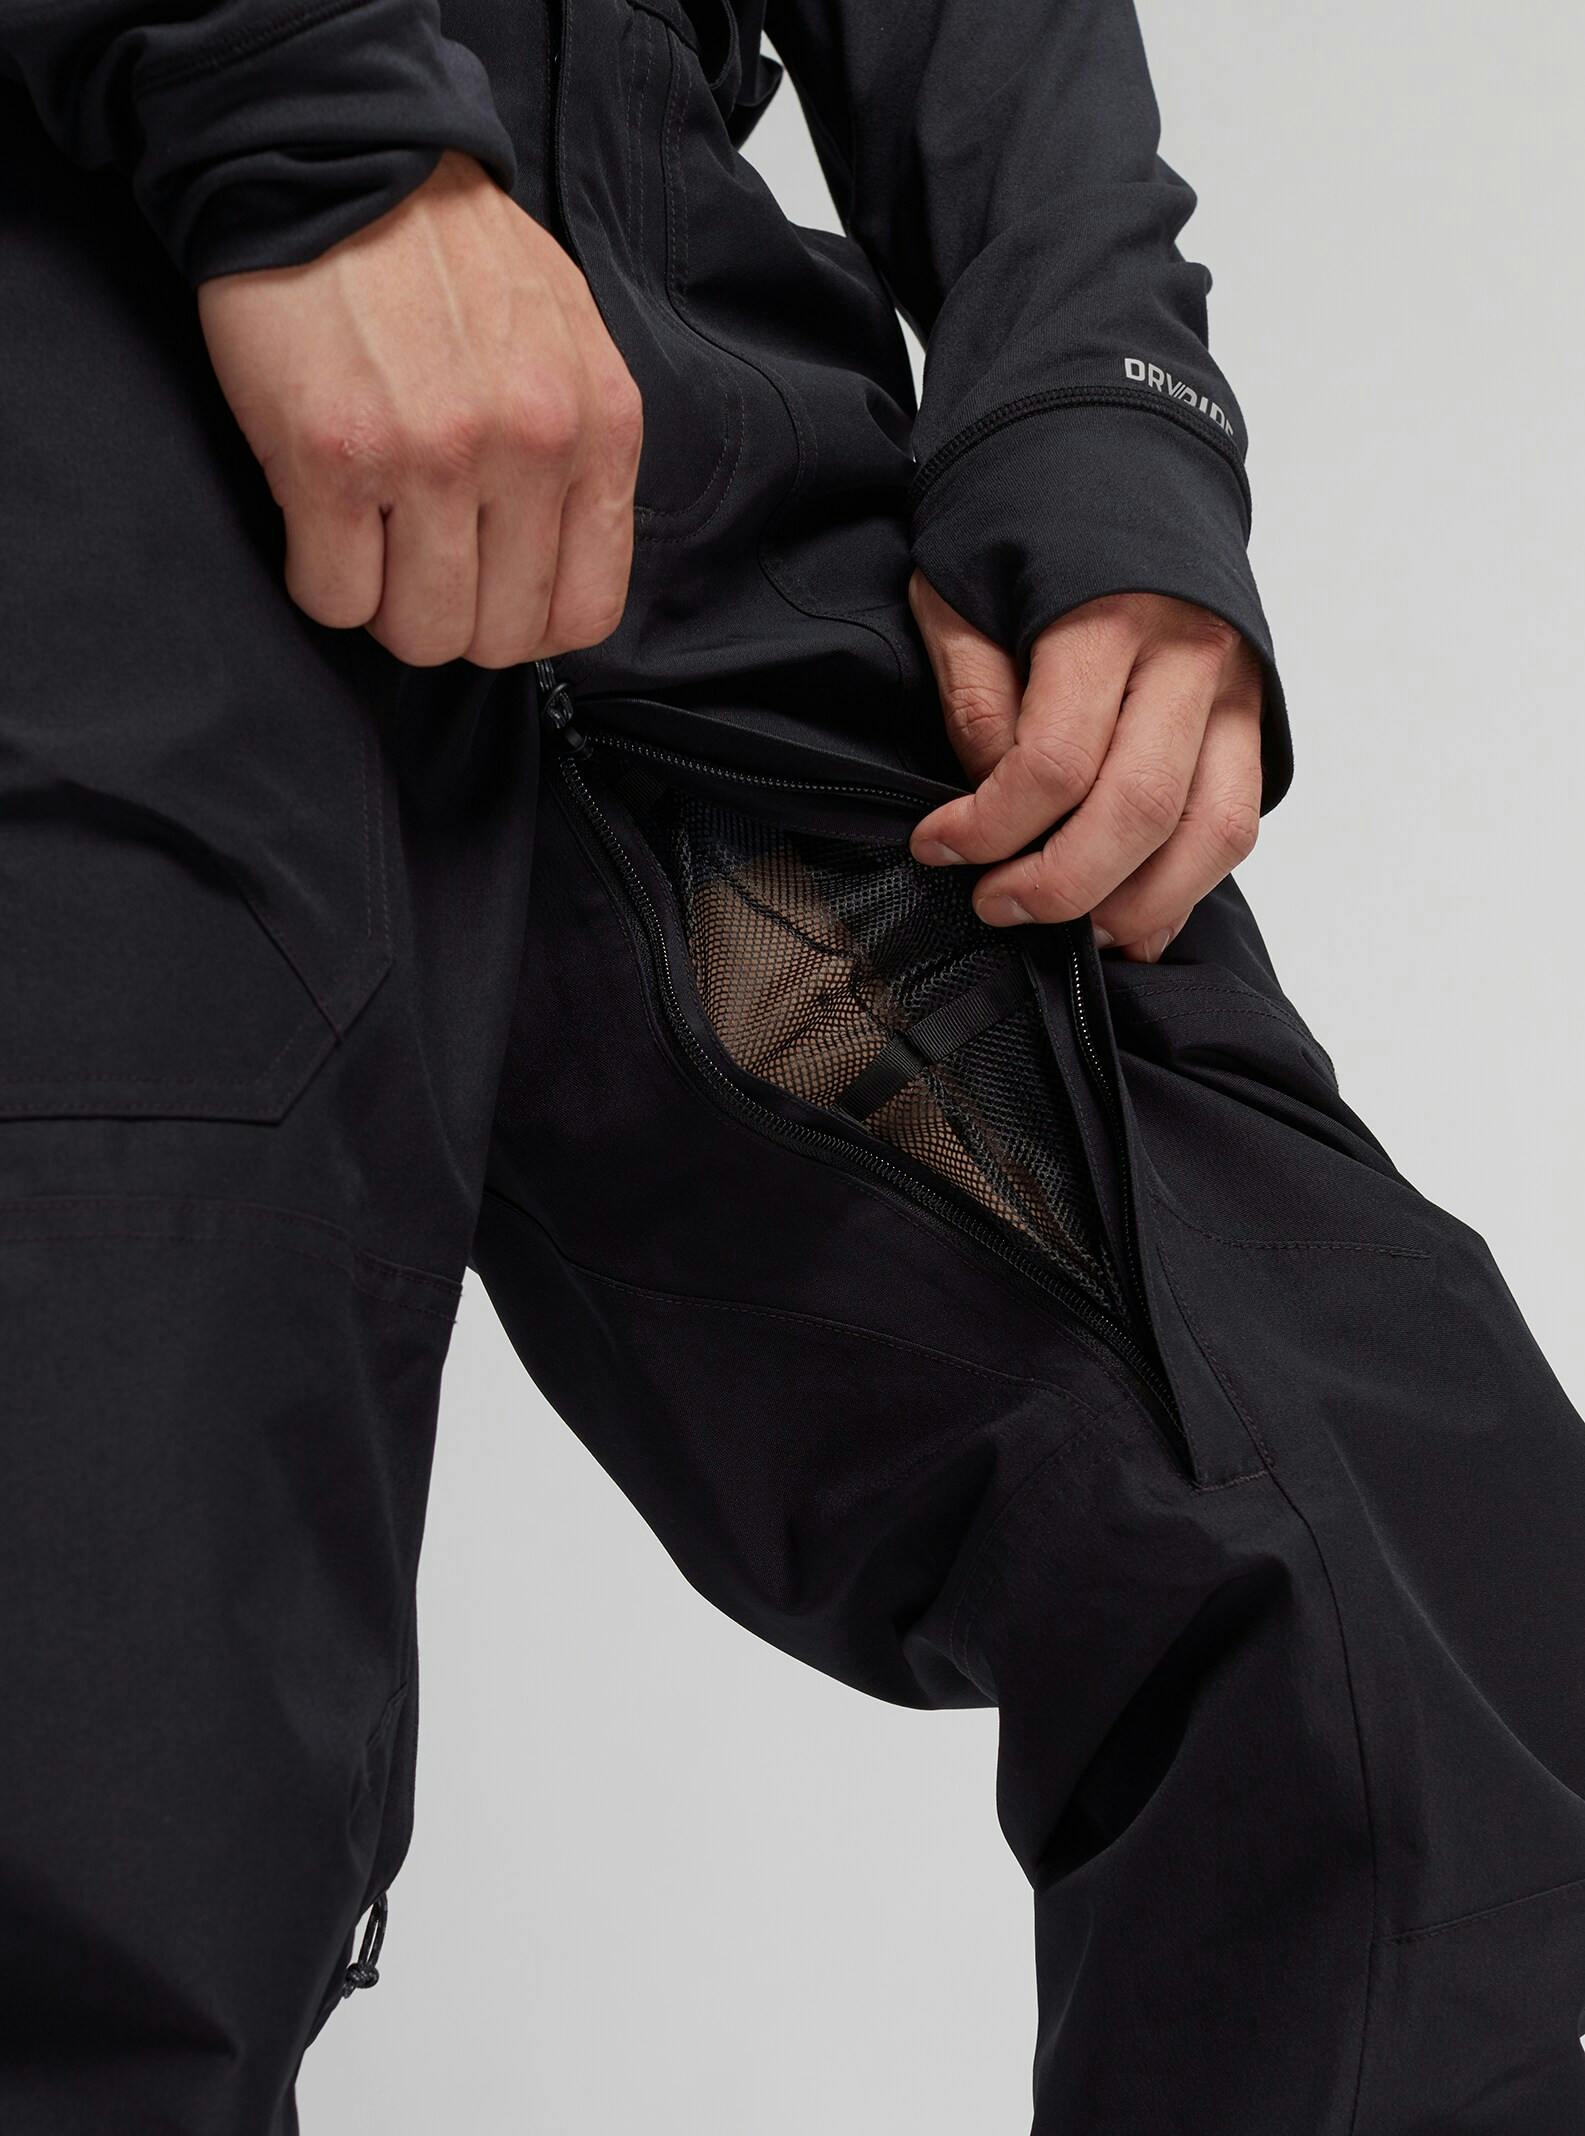 Burton Men's Ballast GORE-TEX 2L Pants